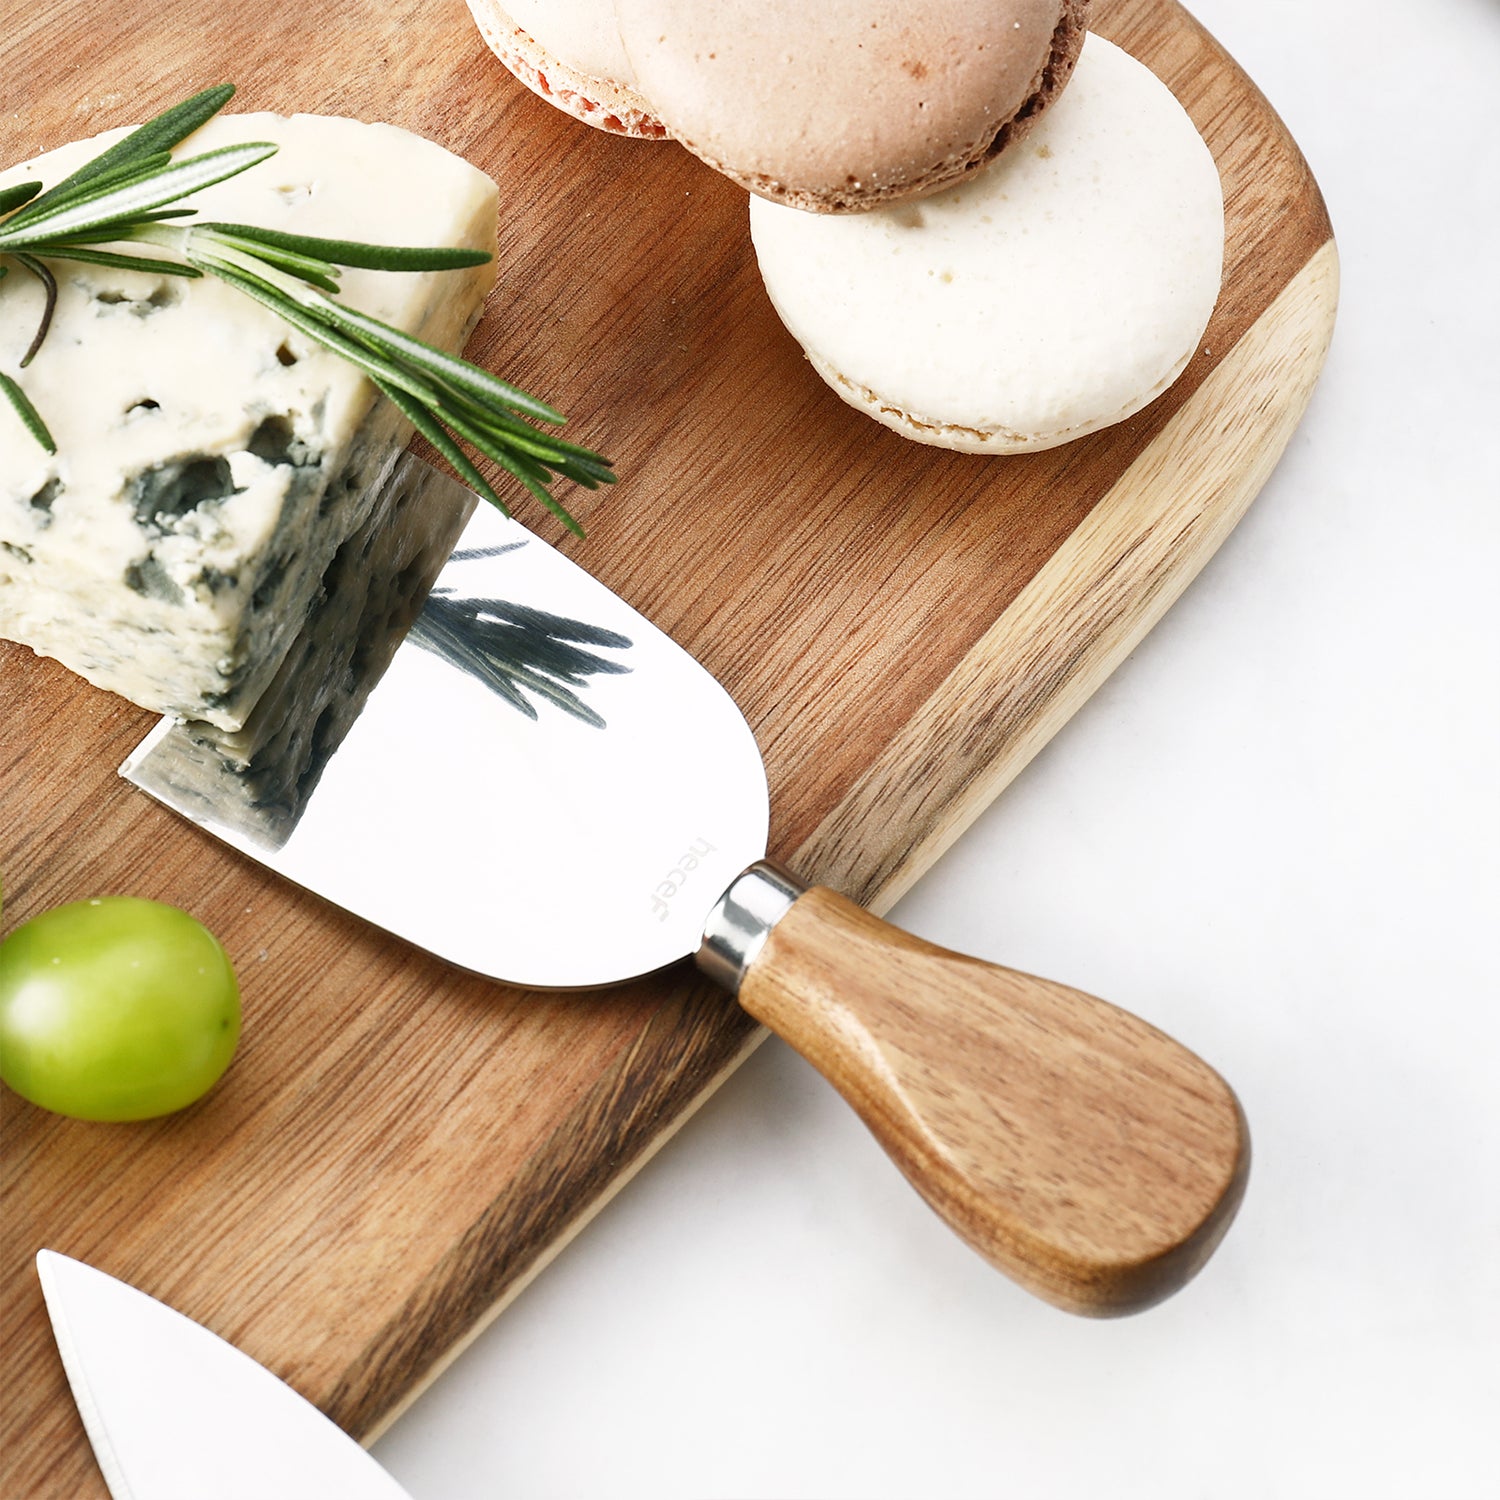 Hecef 2-3 Person Bigger Cheese Board Gift set of 4, a Bigger Acacia Wo –  Hecef Kitchen